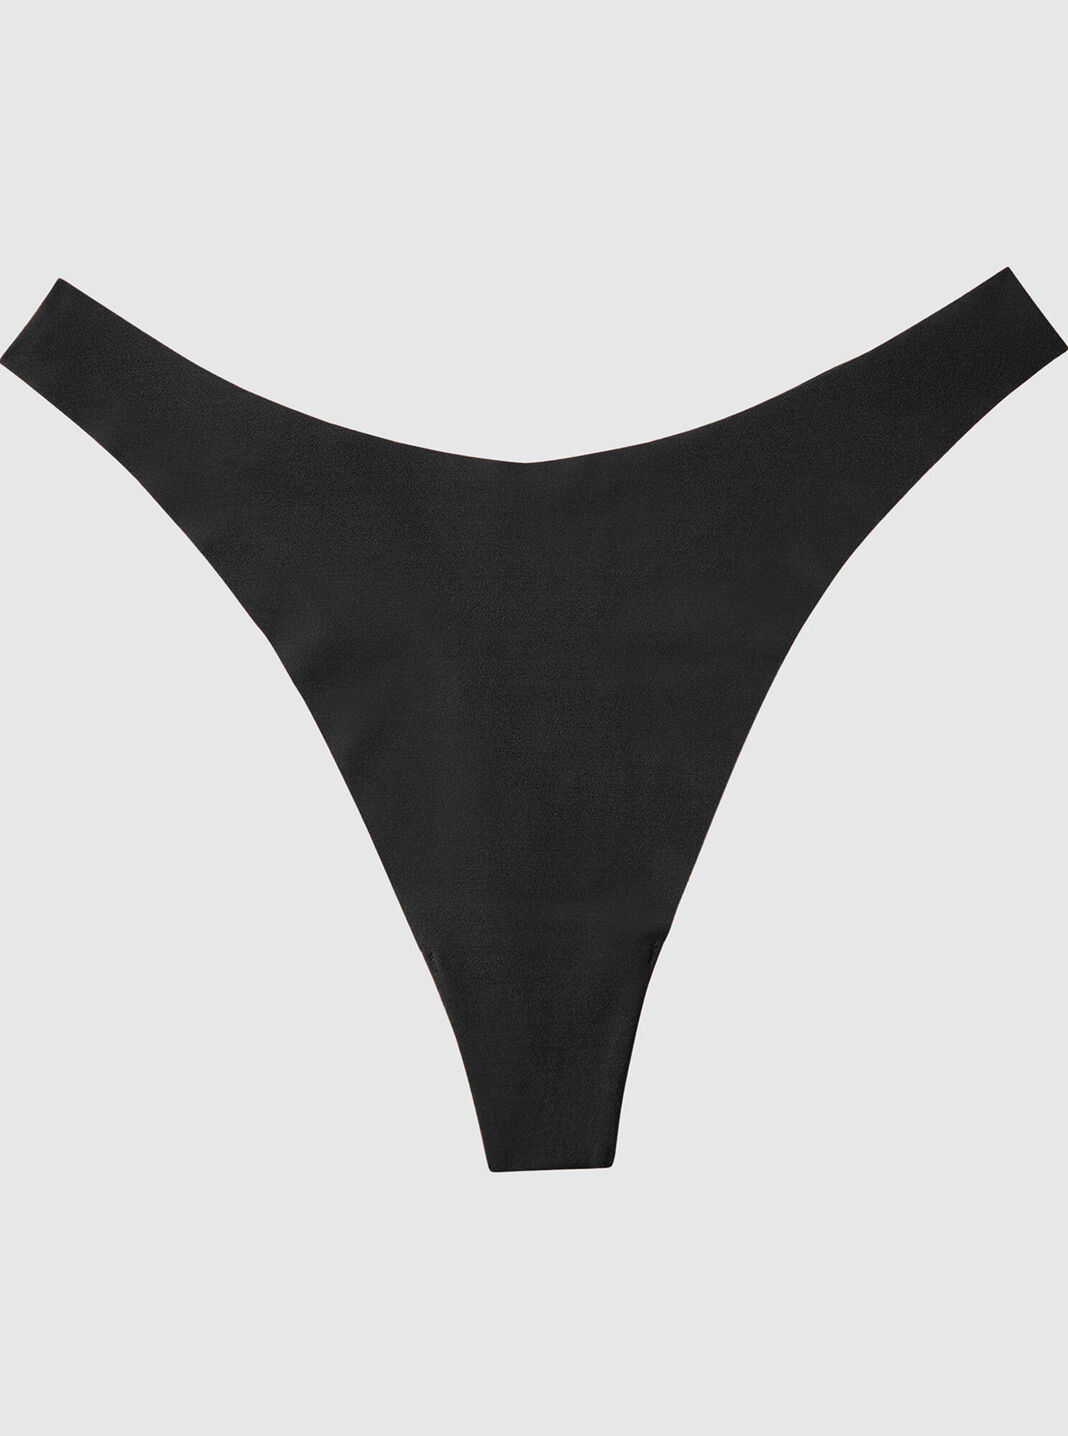 Yunleeb High Waisted Thong No Show Underwear for Women,Seamless High R